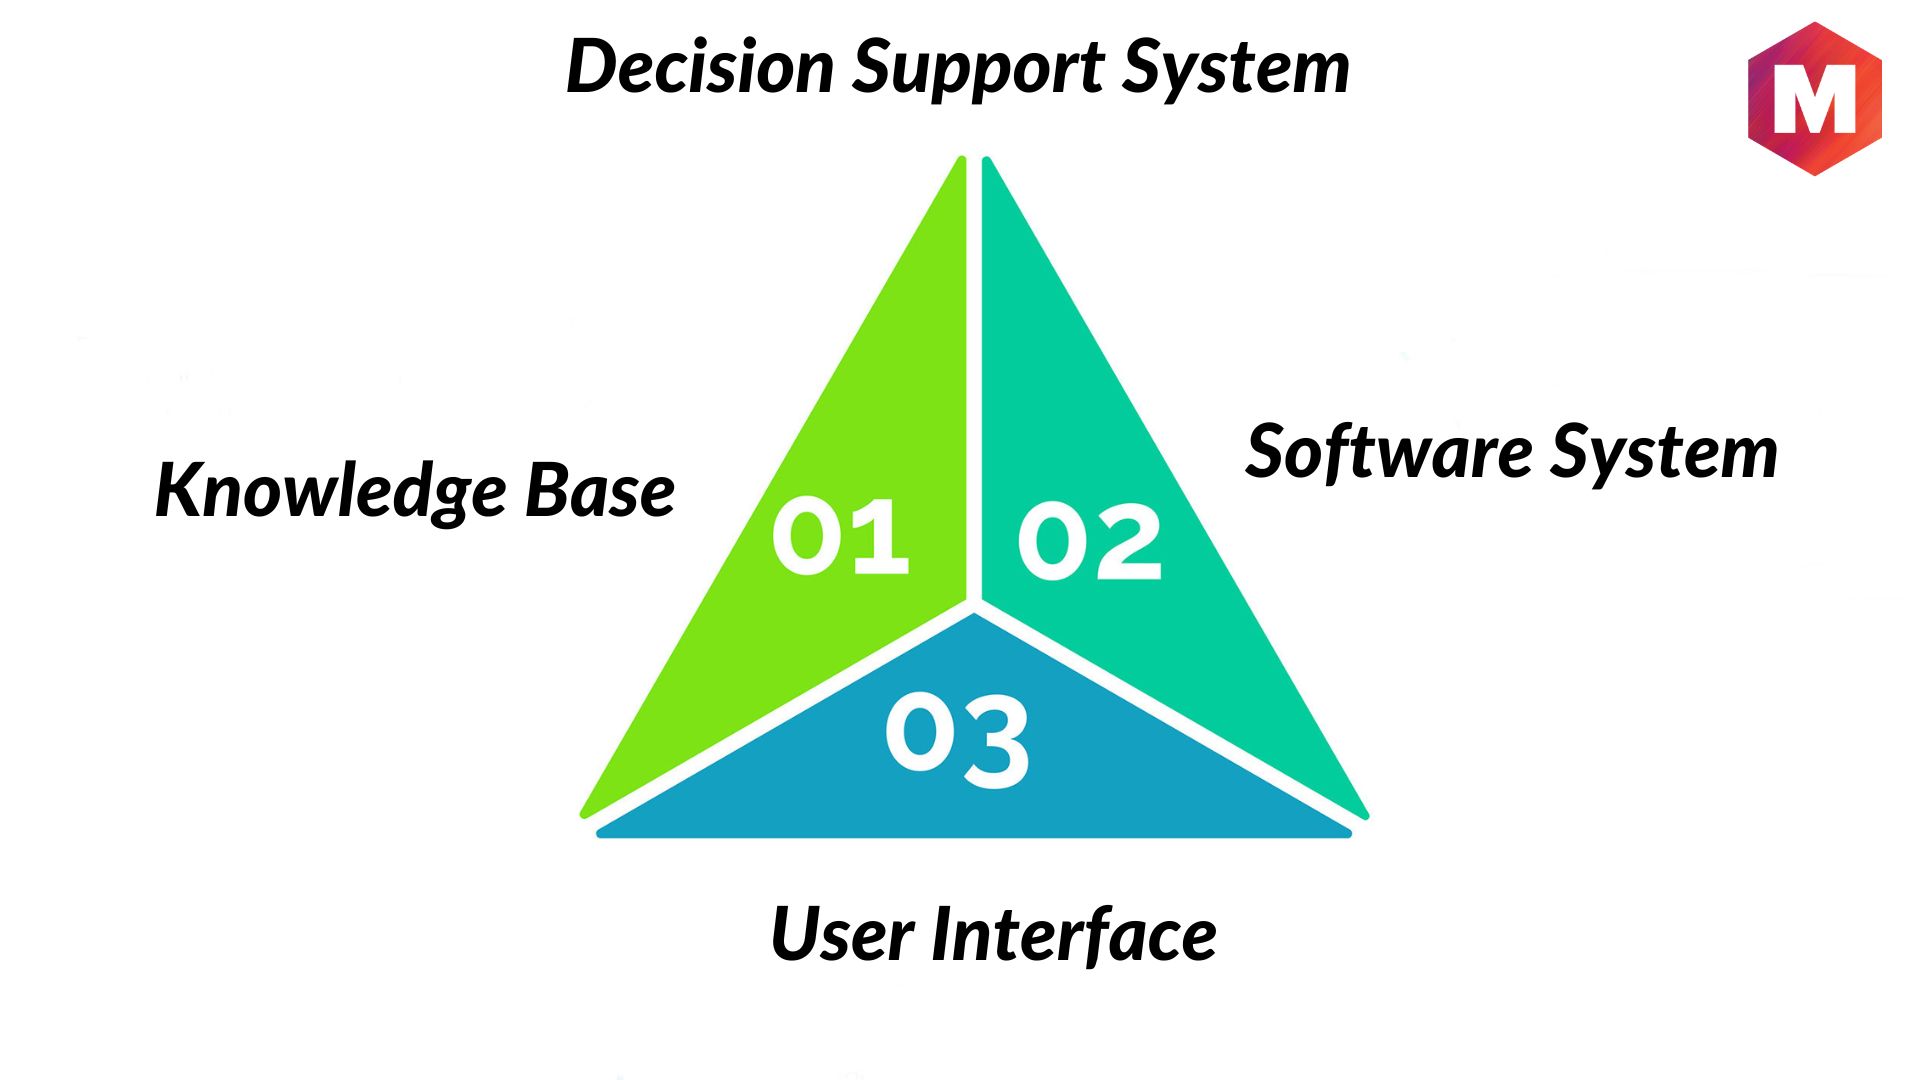 Decision Support System - Definition, Purpose, Advantages And Disadvantages